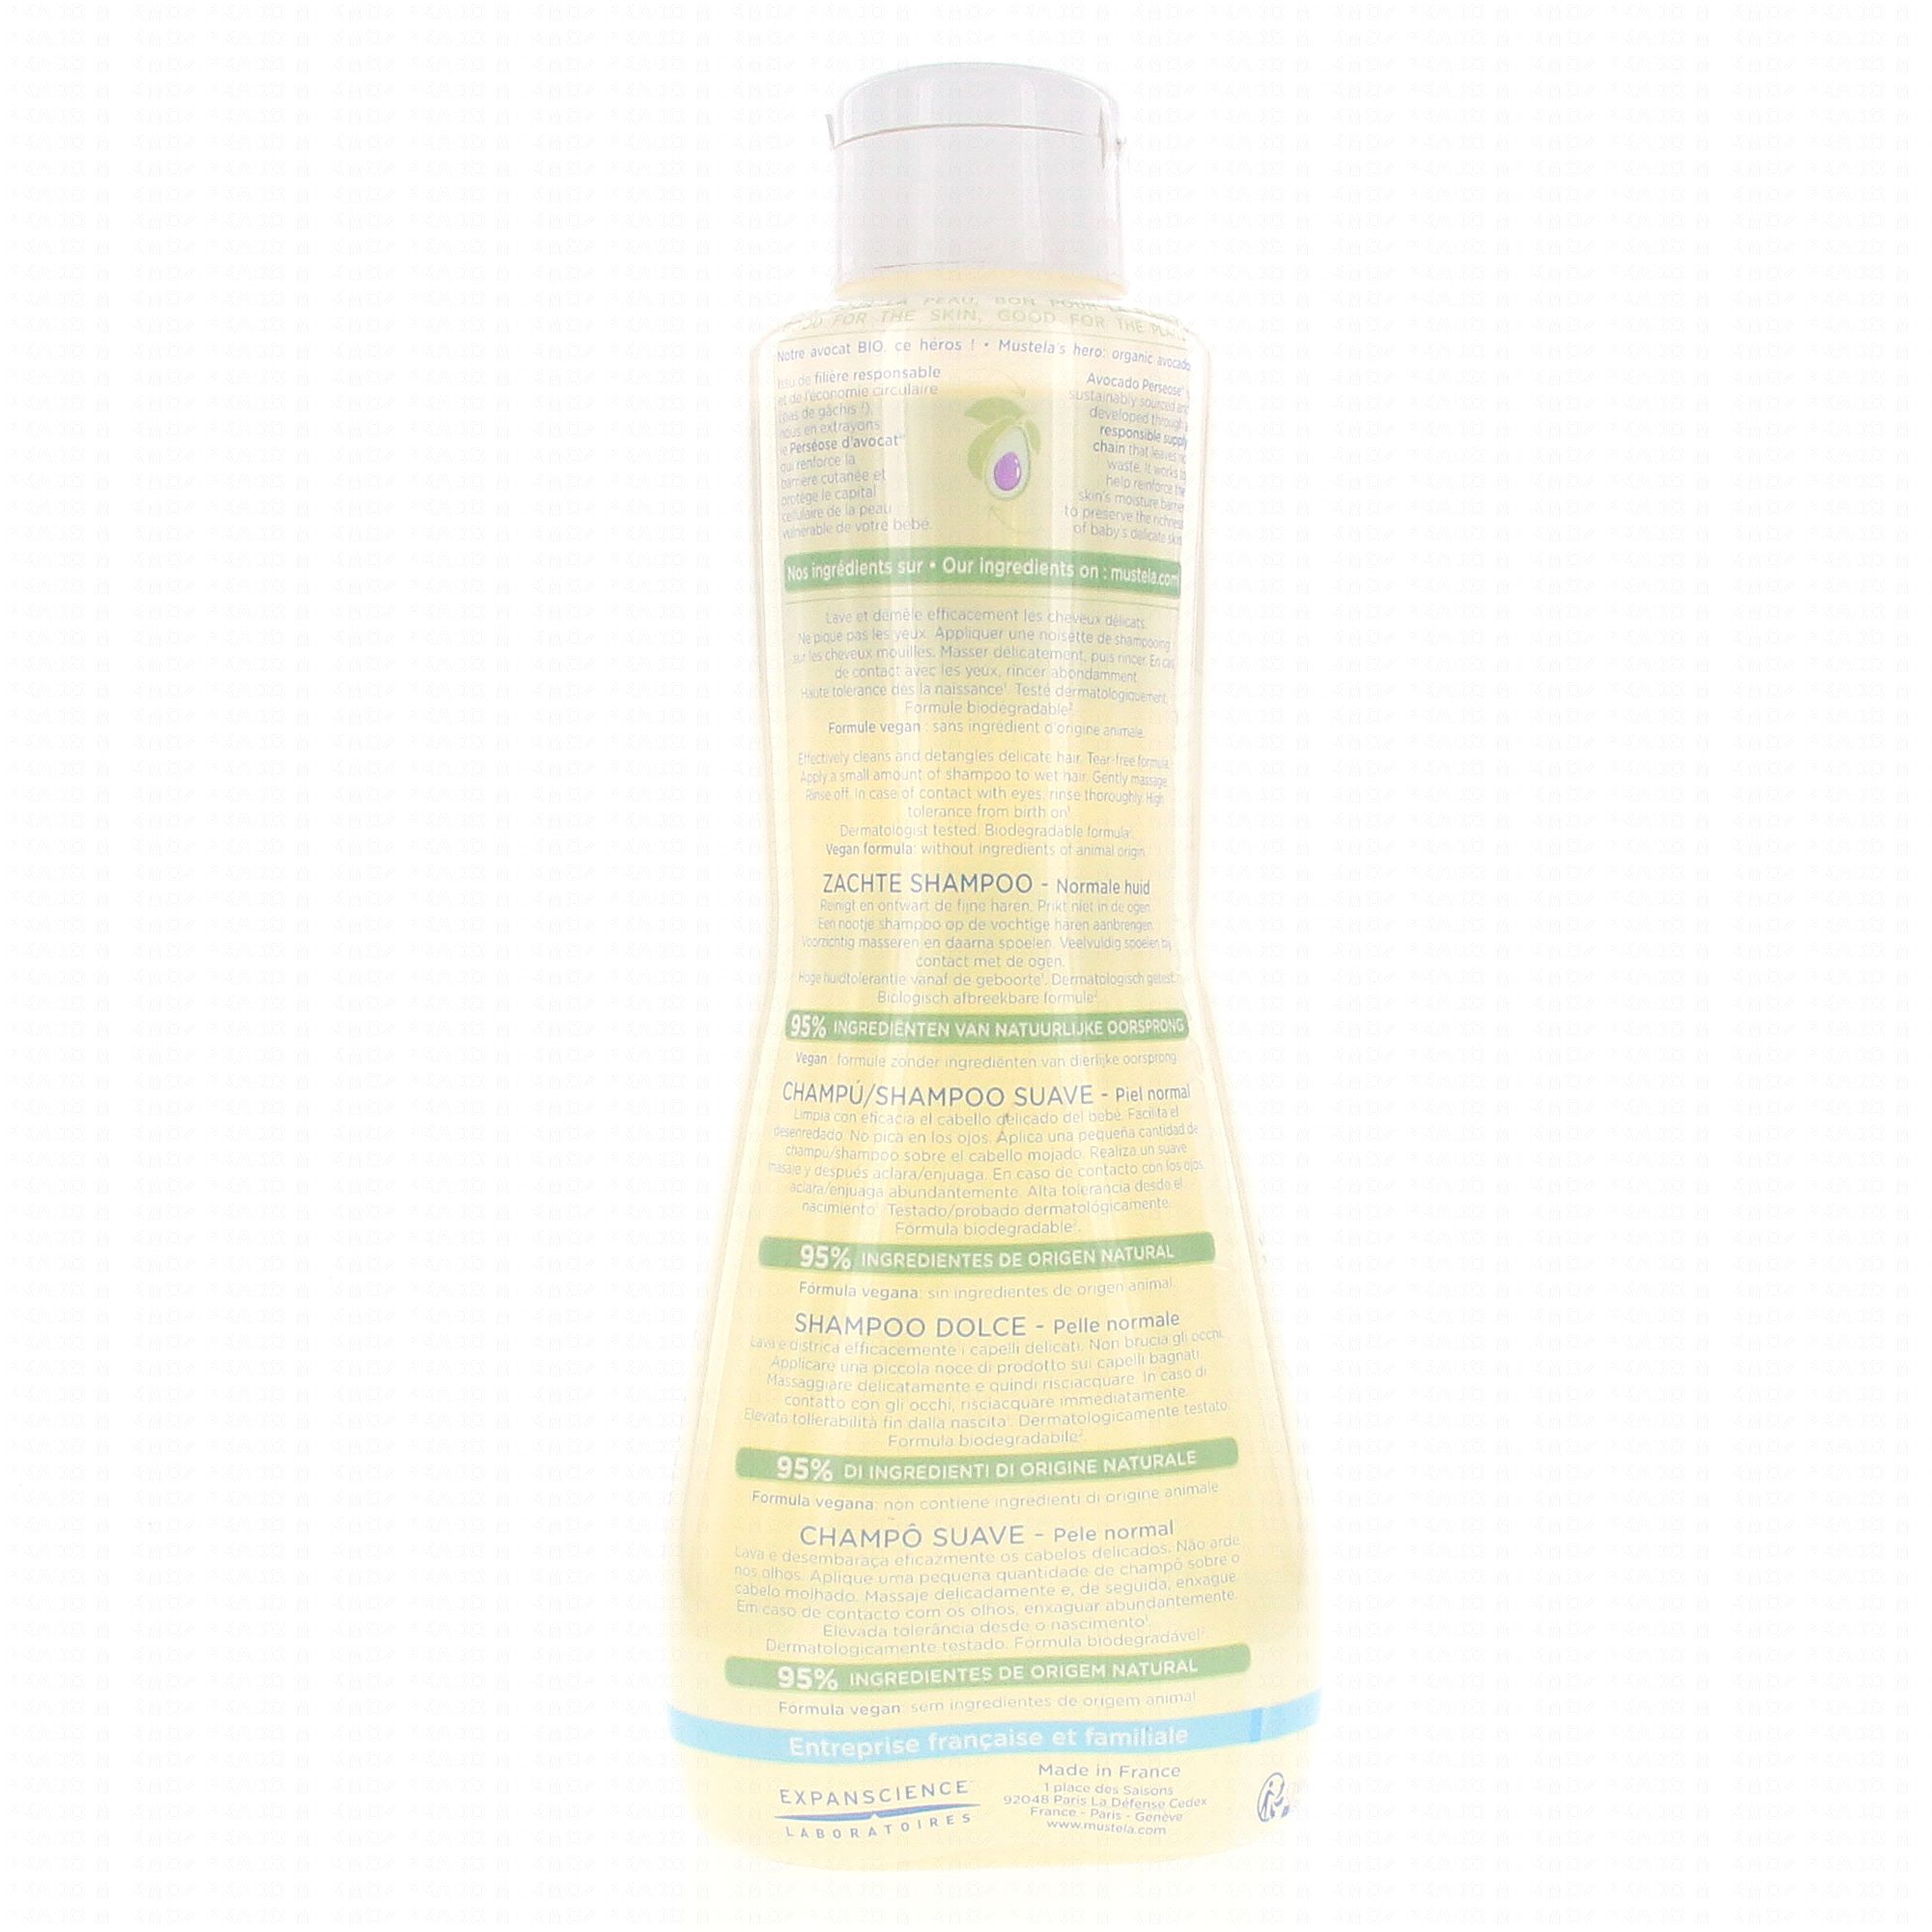 MUSTELA Bébé shampooing mousse croûtes de lait nourrisson flacon 150ml -  Parapharmacie Prado Mermoz